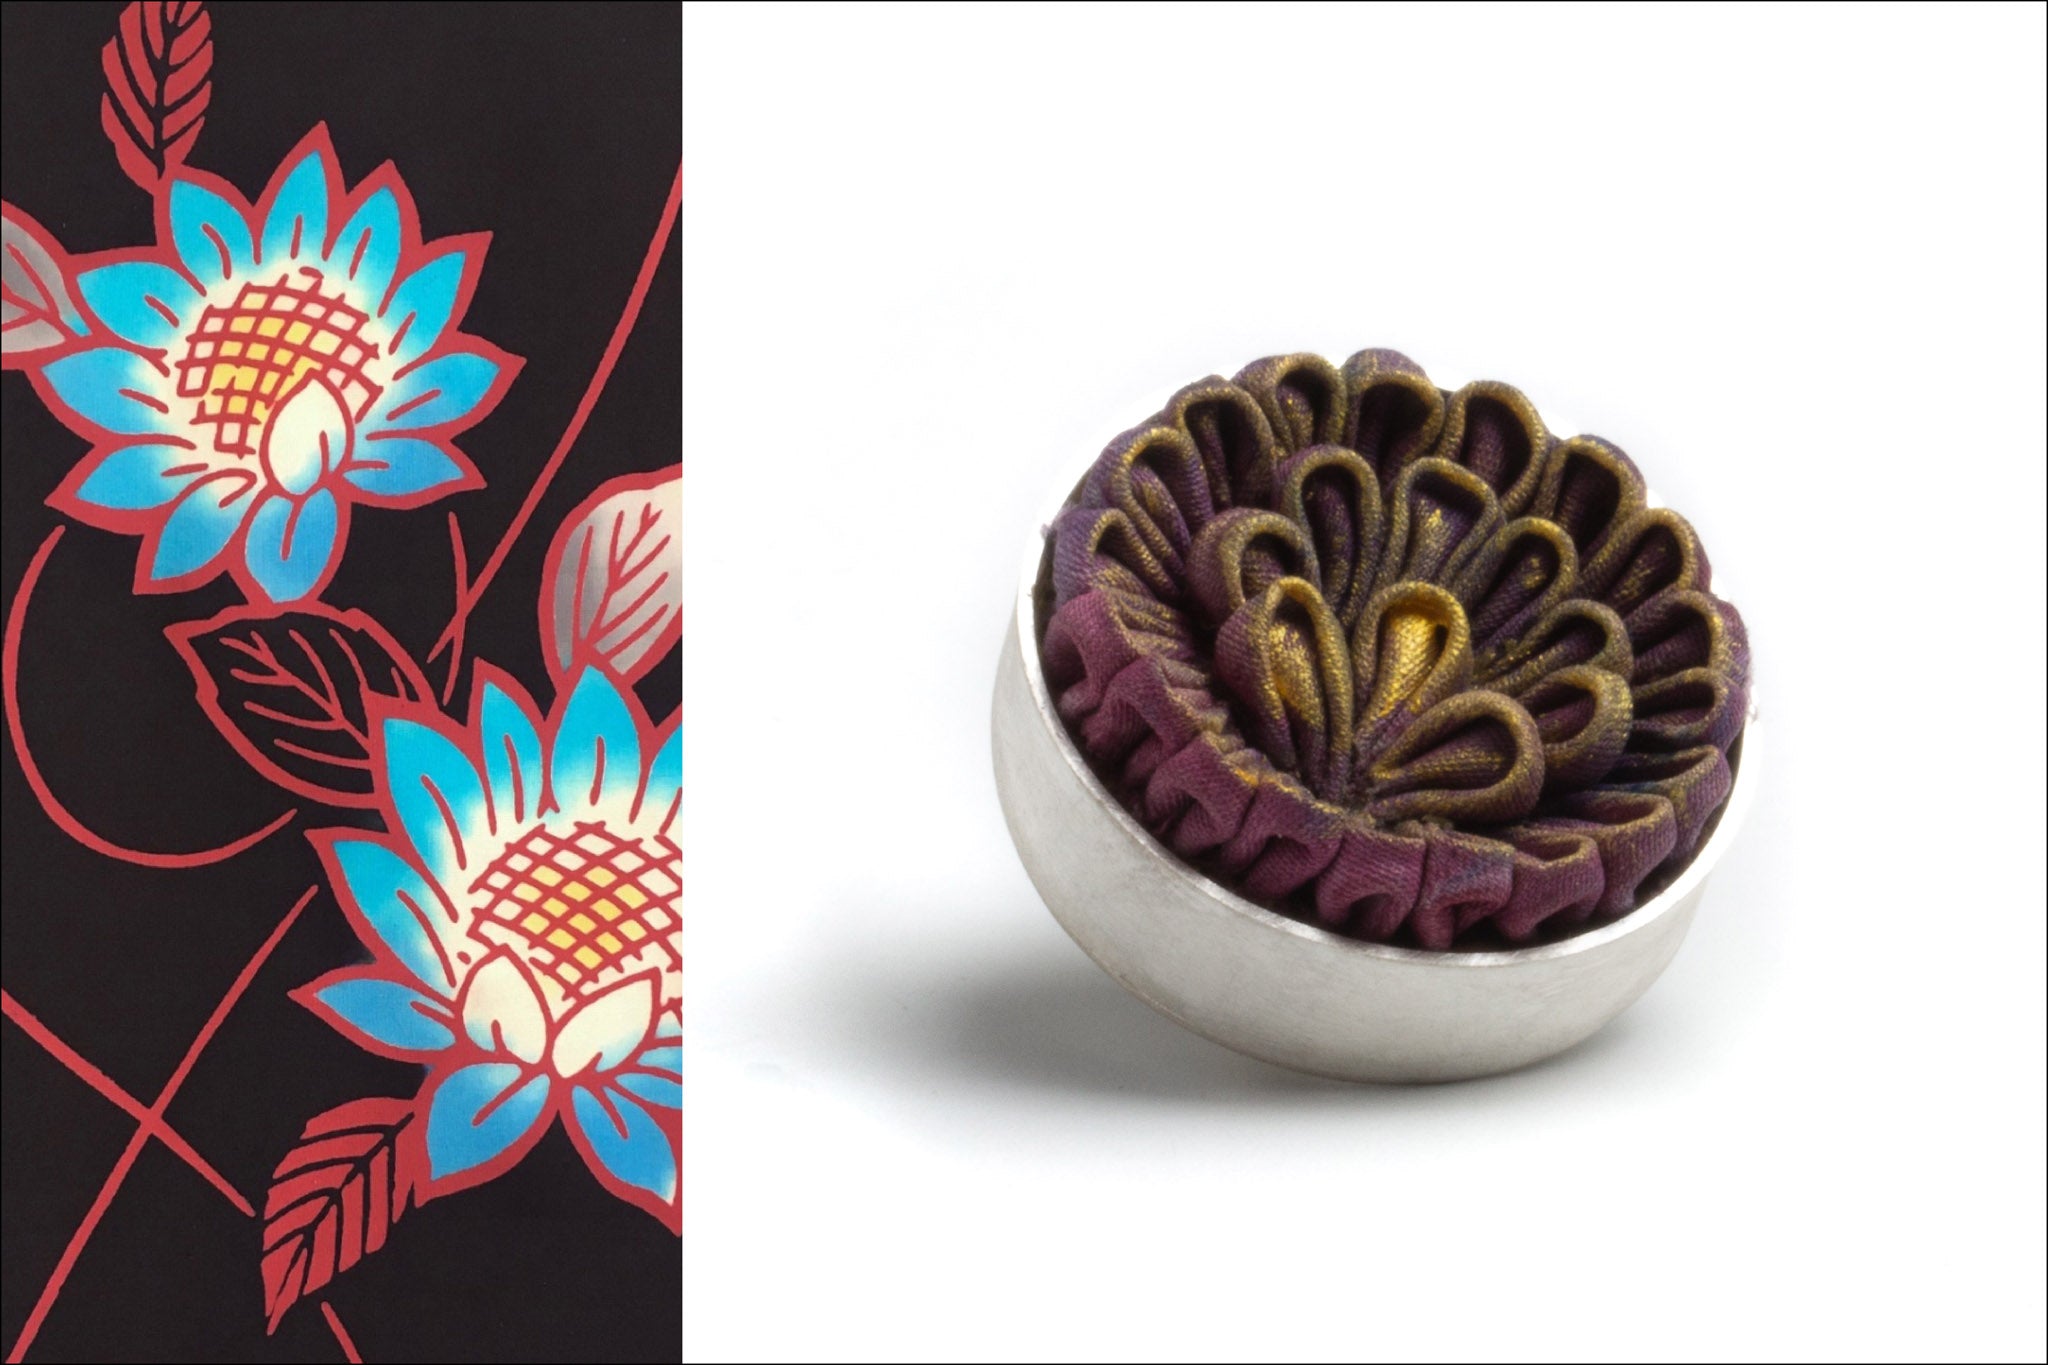 Golden Petals, a brooch by Nancy Megan Corwin for the Yukata Jewelry Show 2022—a creative collaboration between Okan Arts and Danaca Design